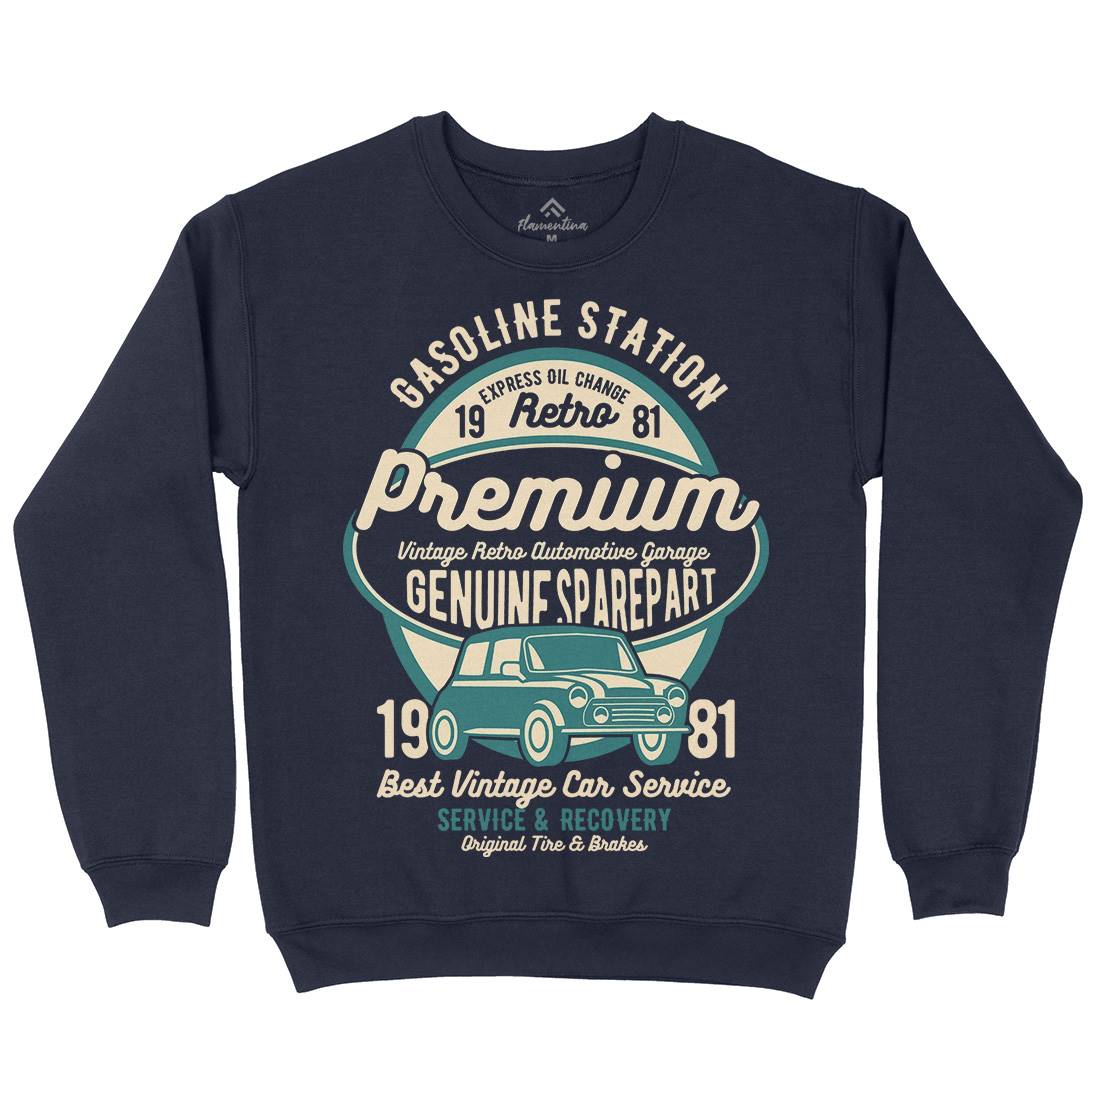 Premium Garage Kids Crew Neck Sweatshirt Cars B436